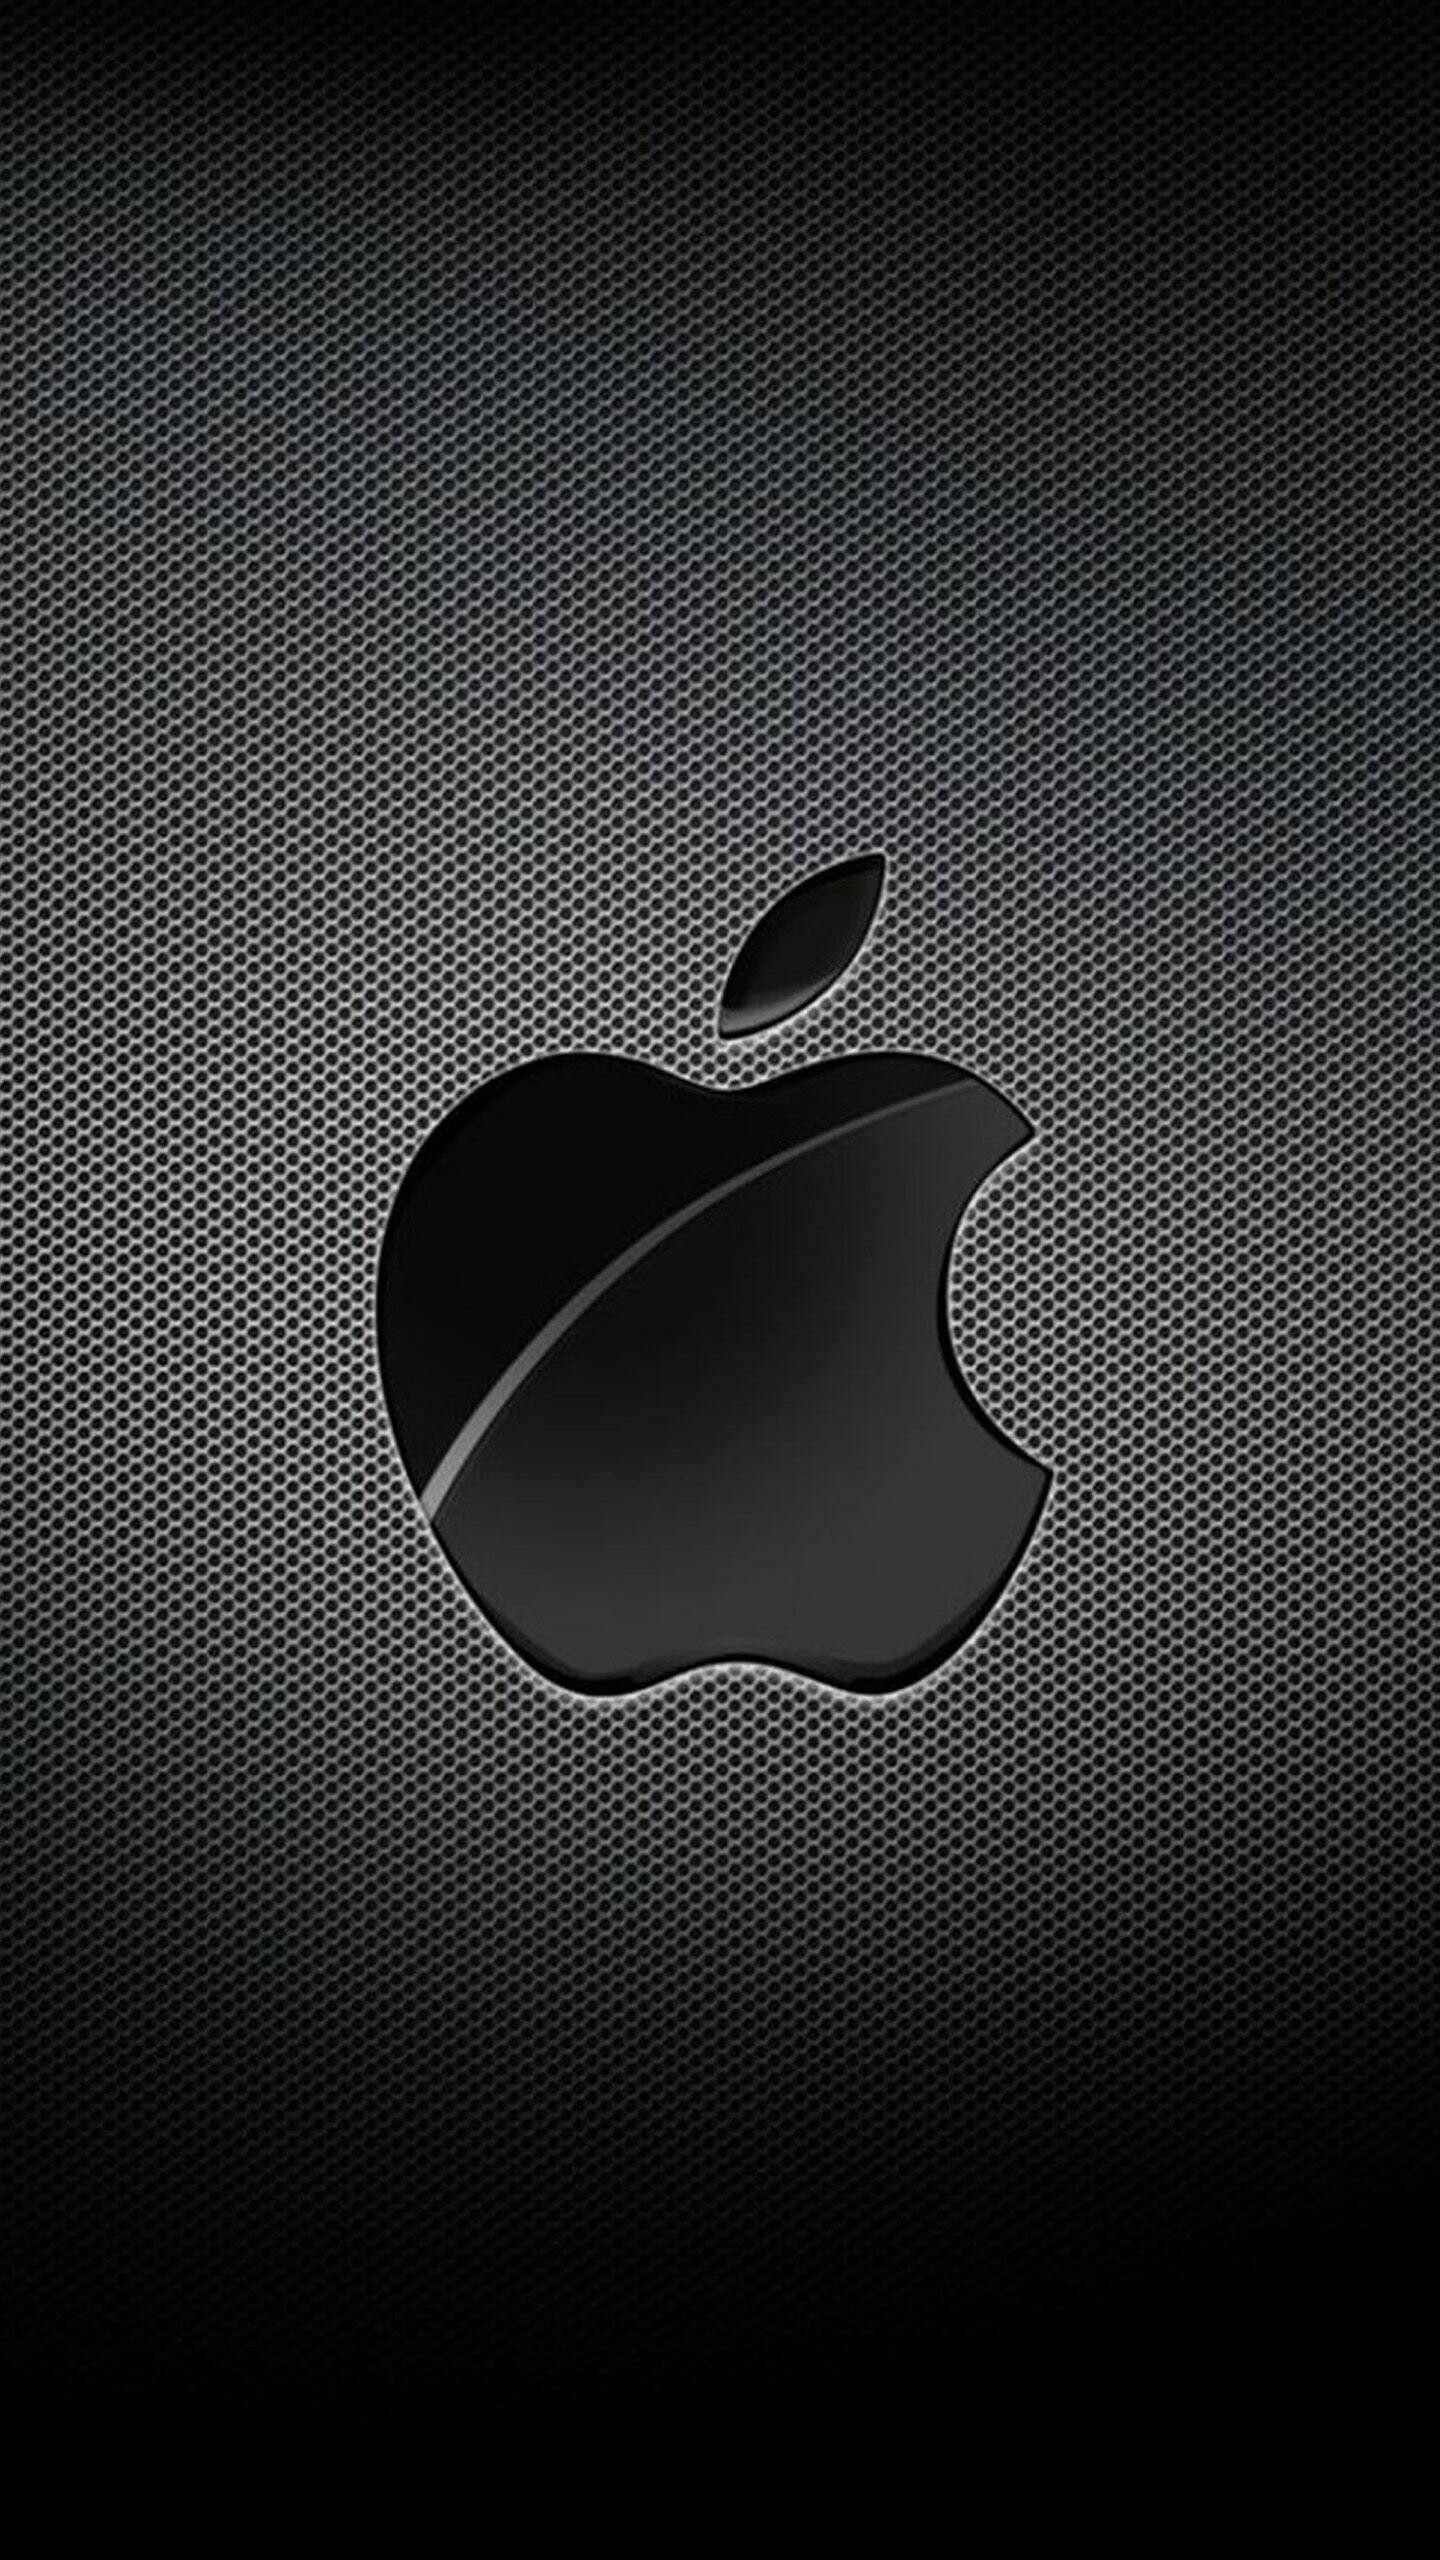 Apple Logo: Apple's product portfolio: iPhone, iPad, Mac, iPod, Logotype. 1440x2560 HD Wallpaper.